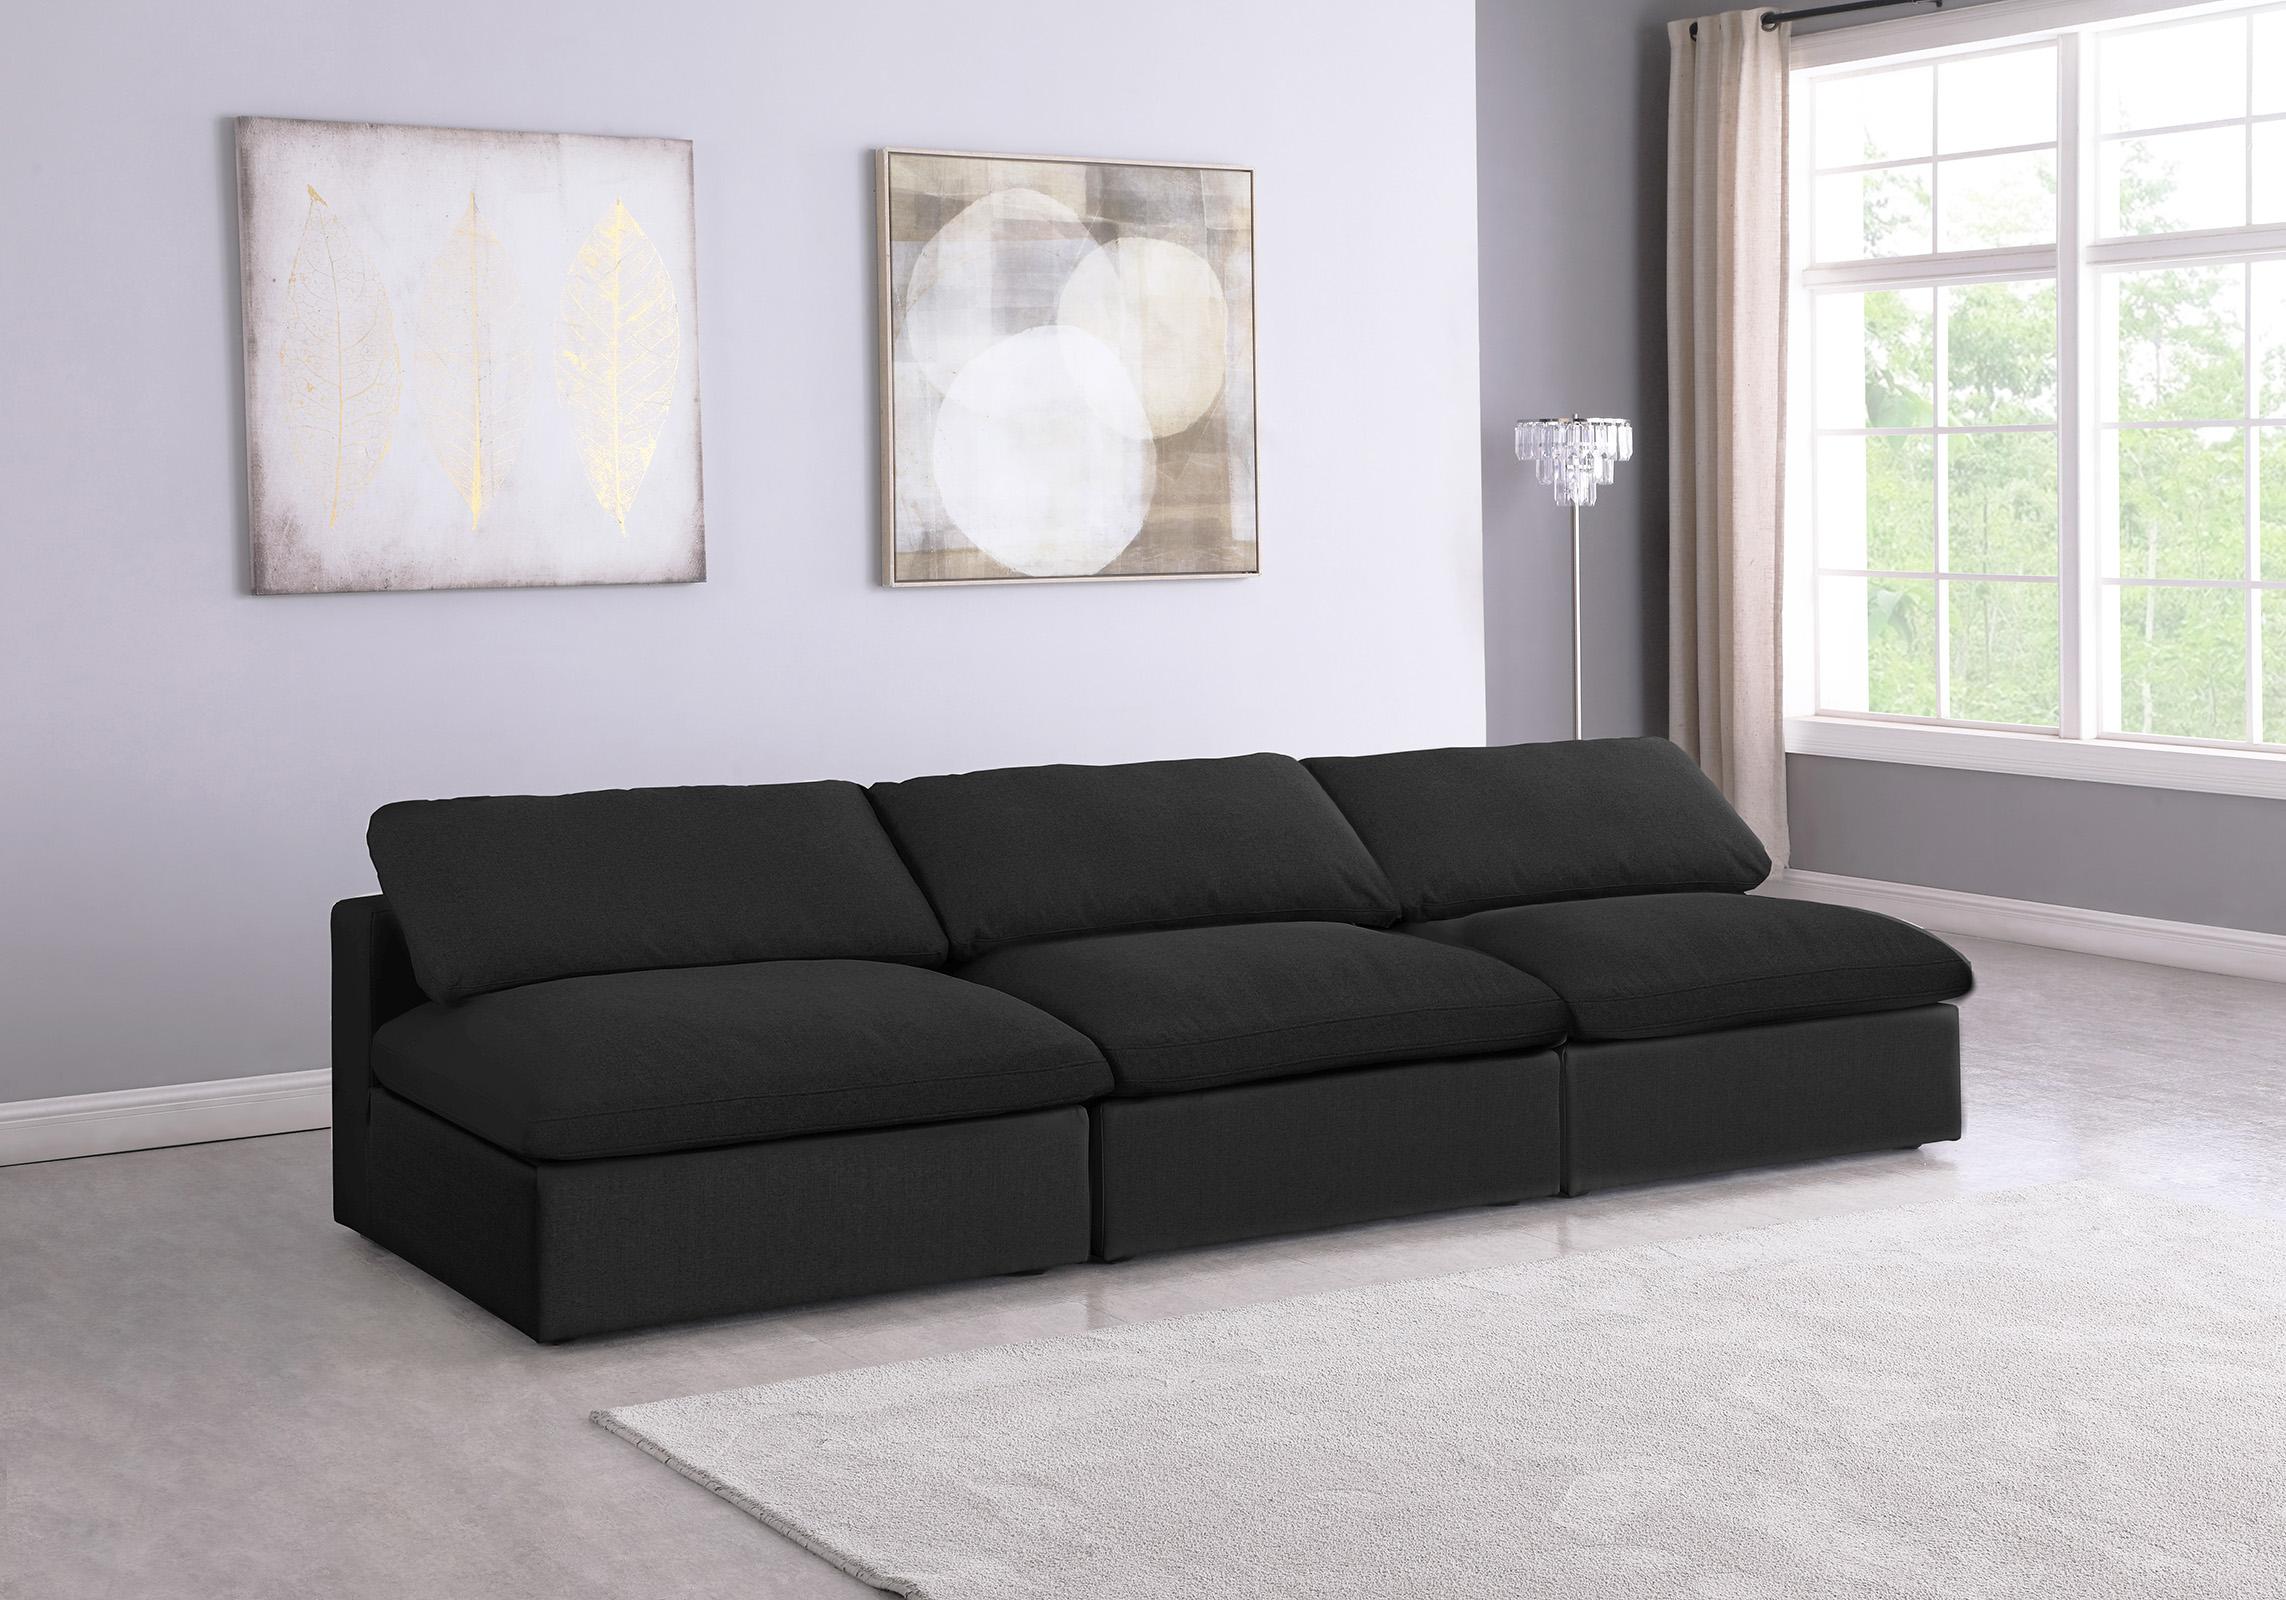 

    
Serene Black Linen Textured Fabric Deluxe Comfort Modular Armless Sofa S117 Meridian
